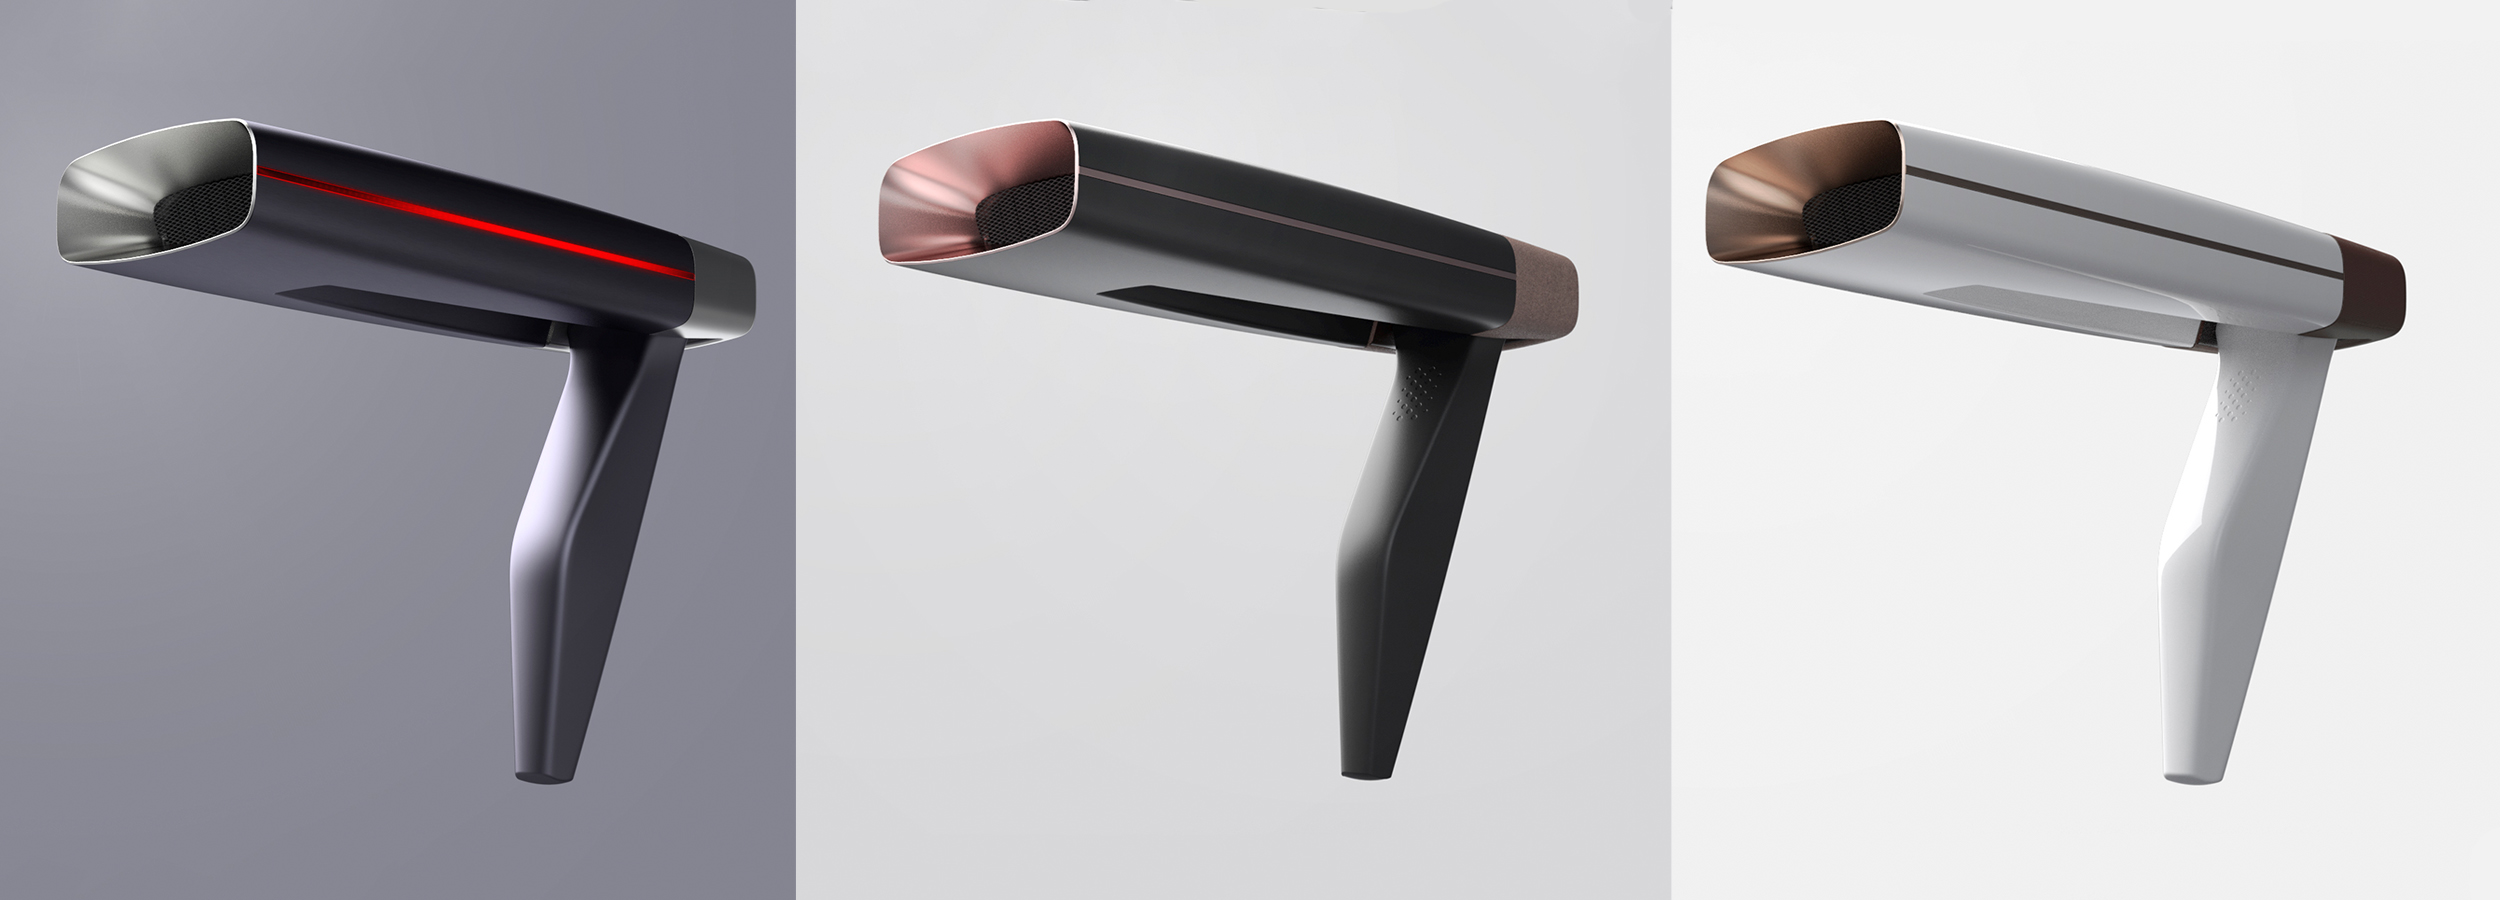 Supersonic Travel Hairdryer Industrial design Creative Wave